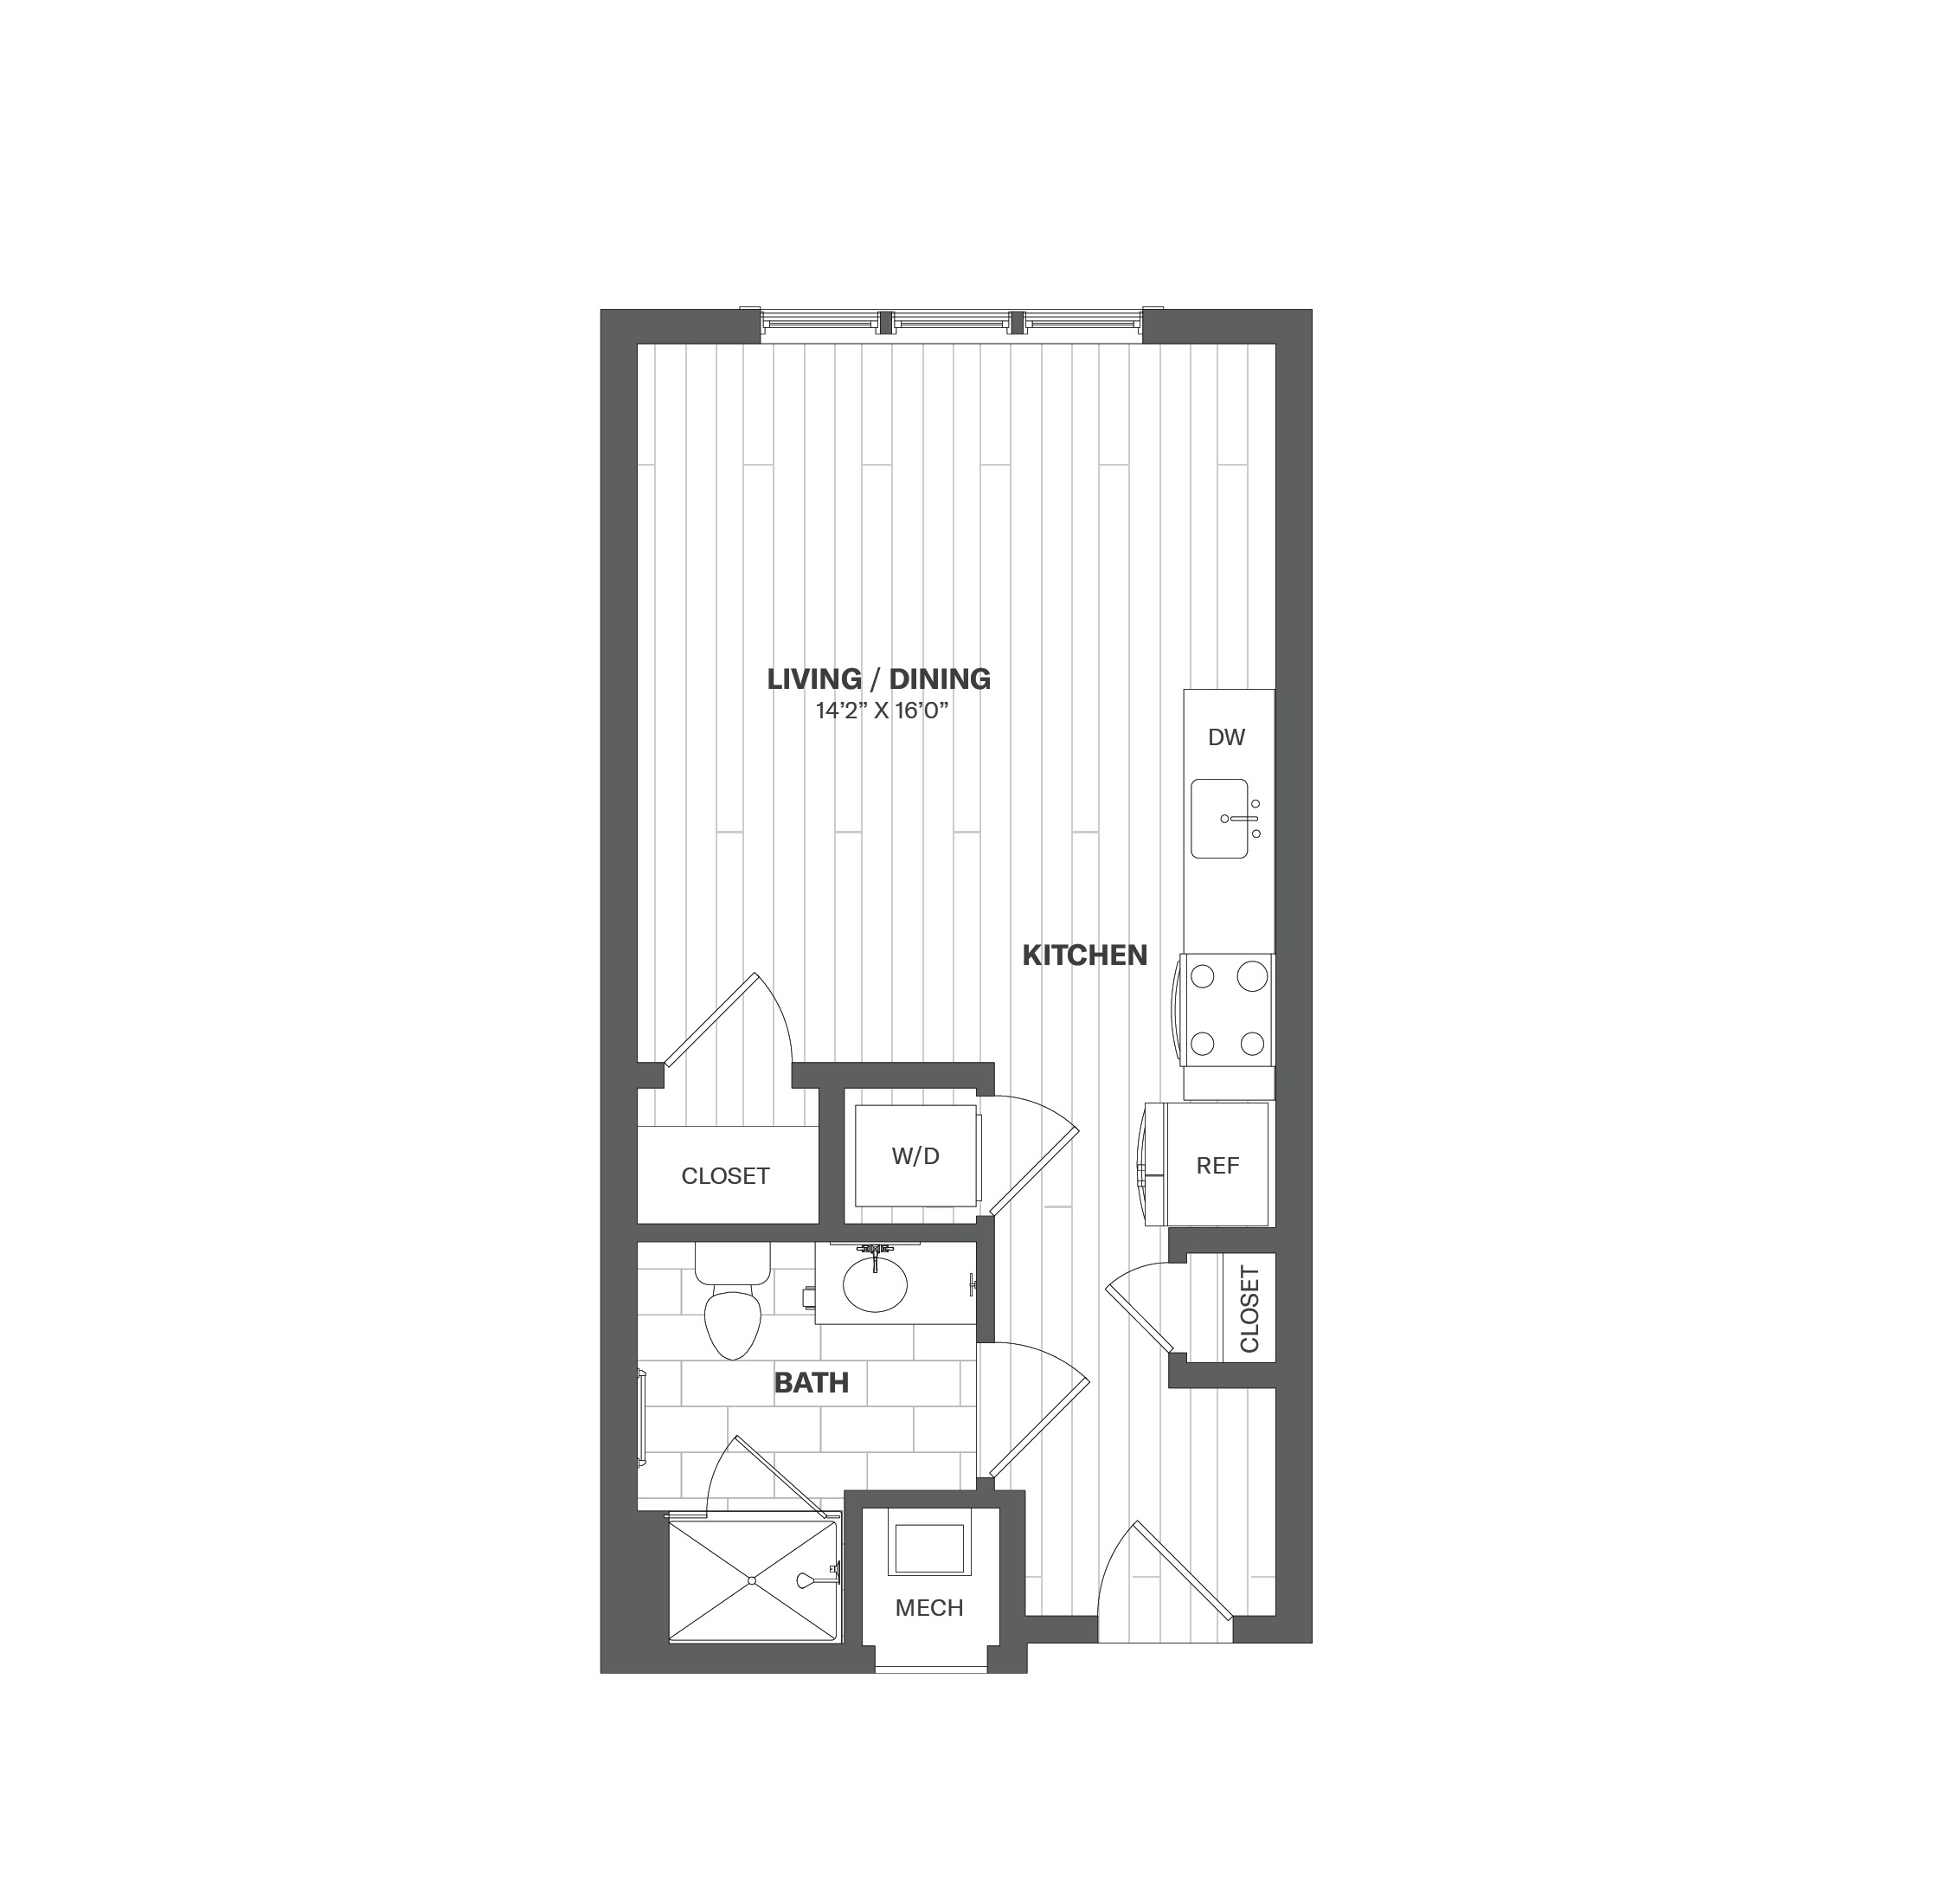 Apartment 330 floorplan